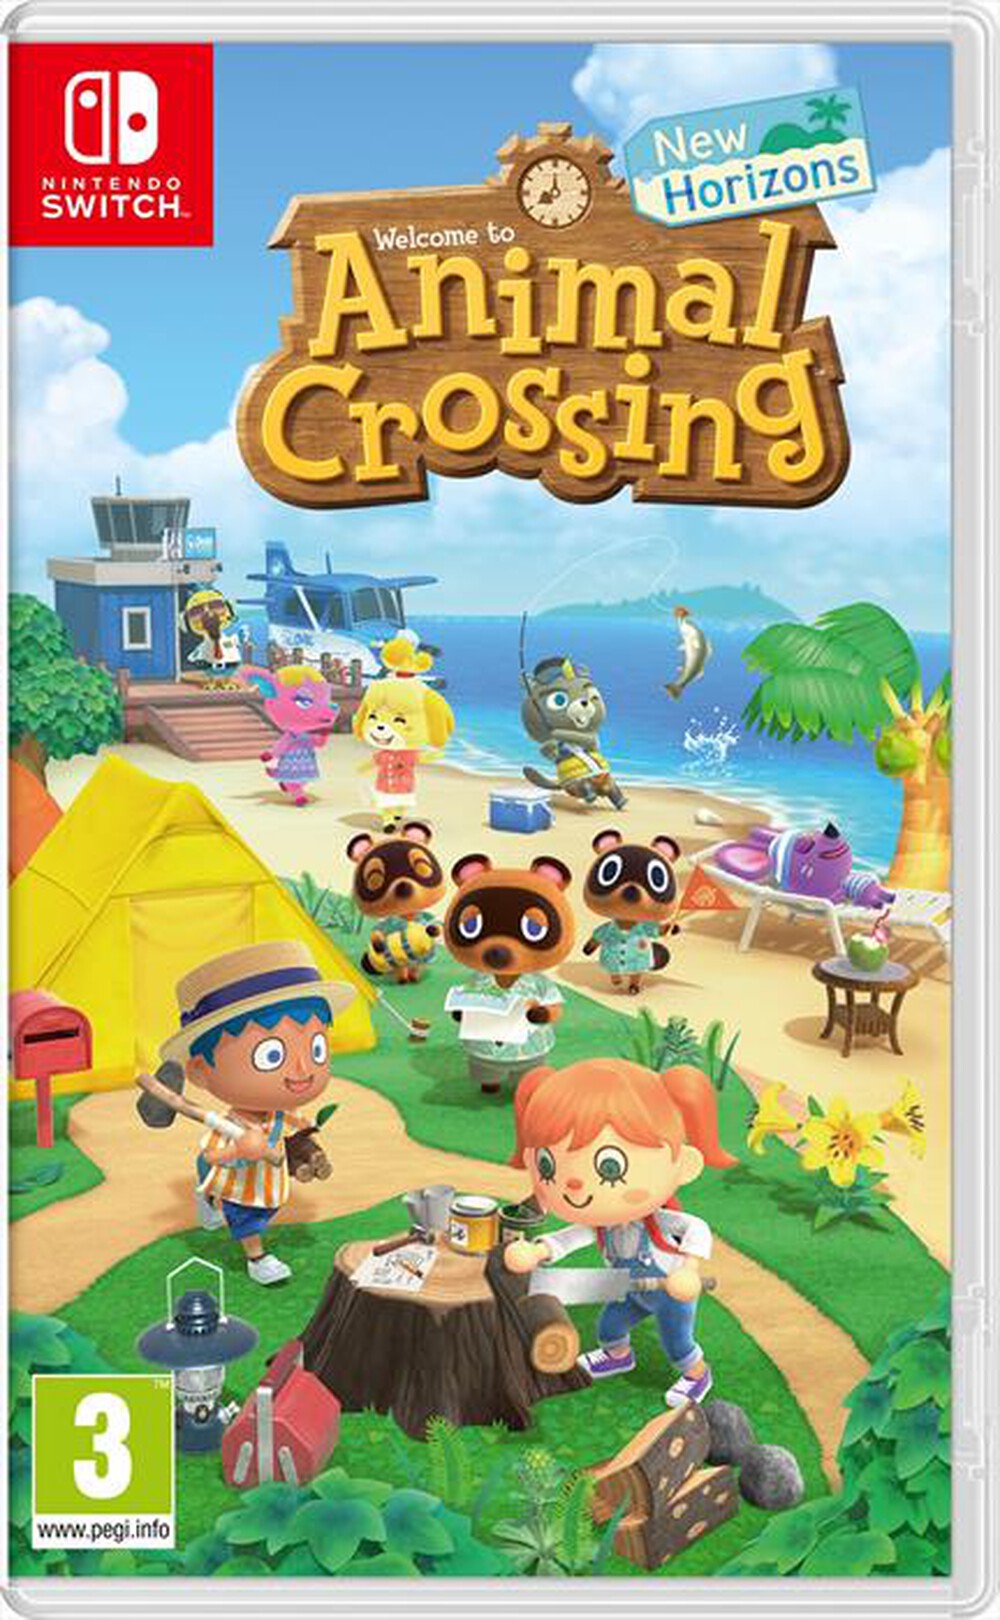 "NINTENDO - Animal Crossing: New Horizons - "